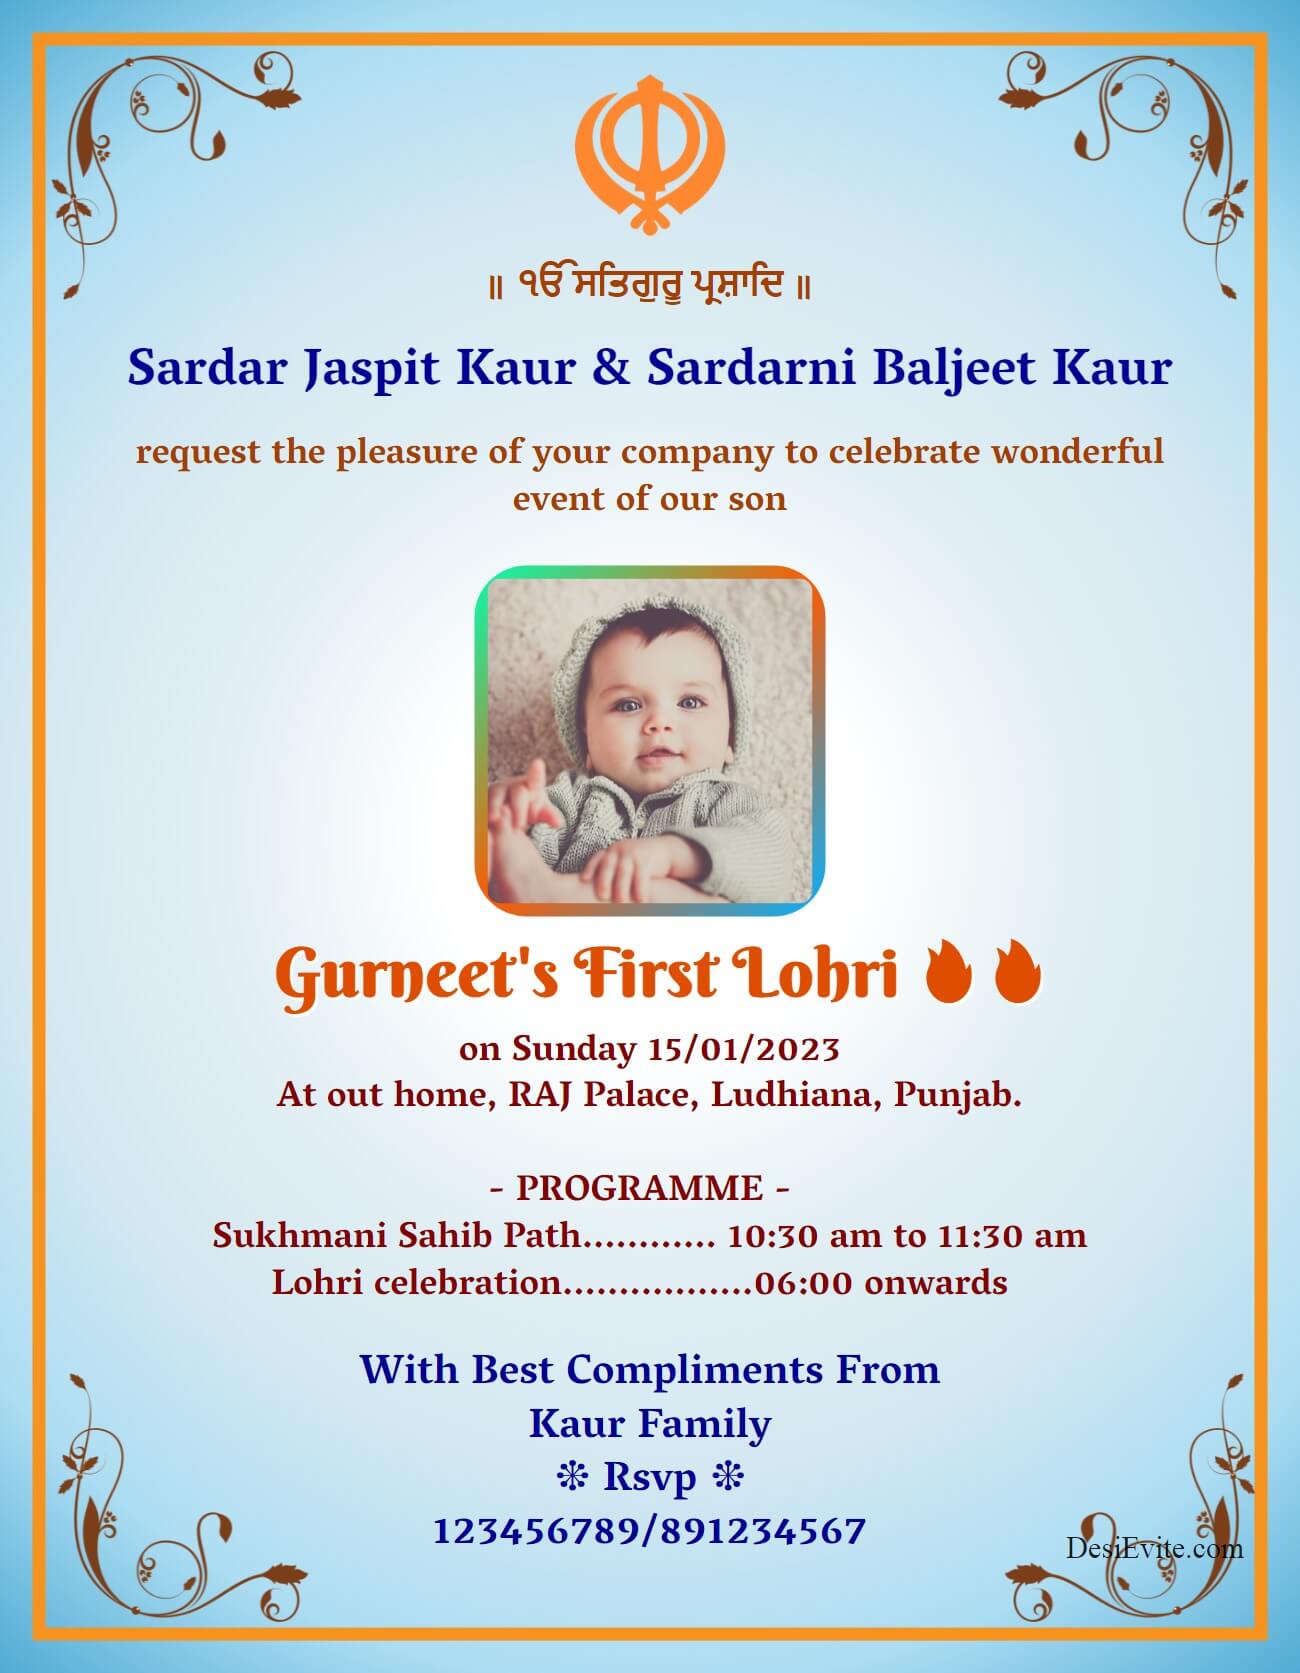 First lohri invitation card sikh religious theme.